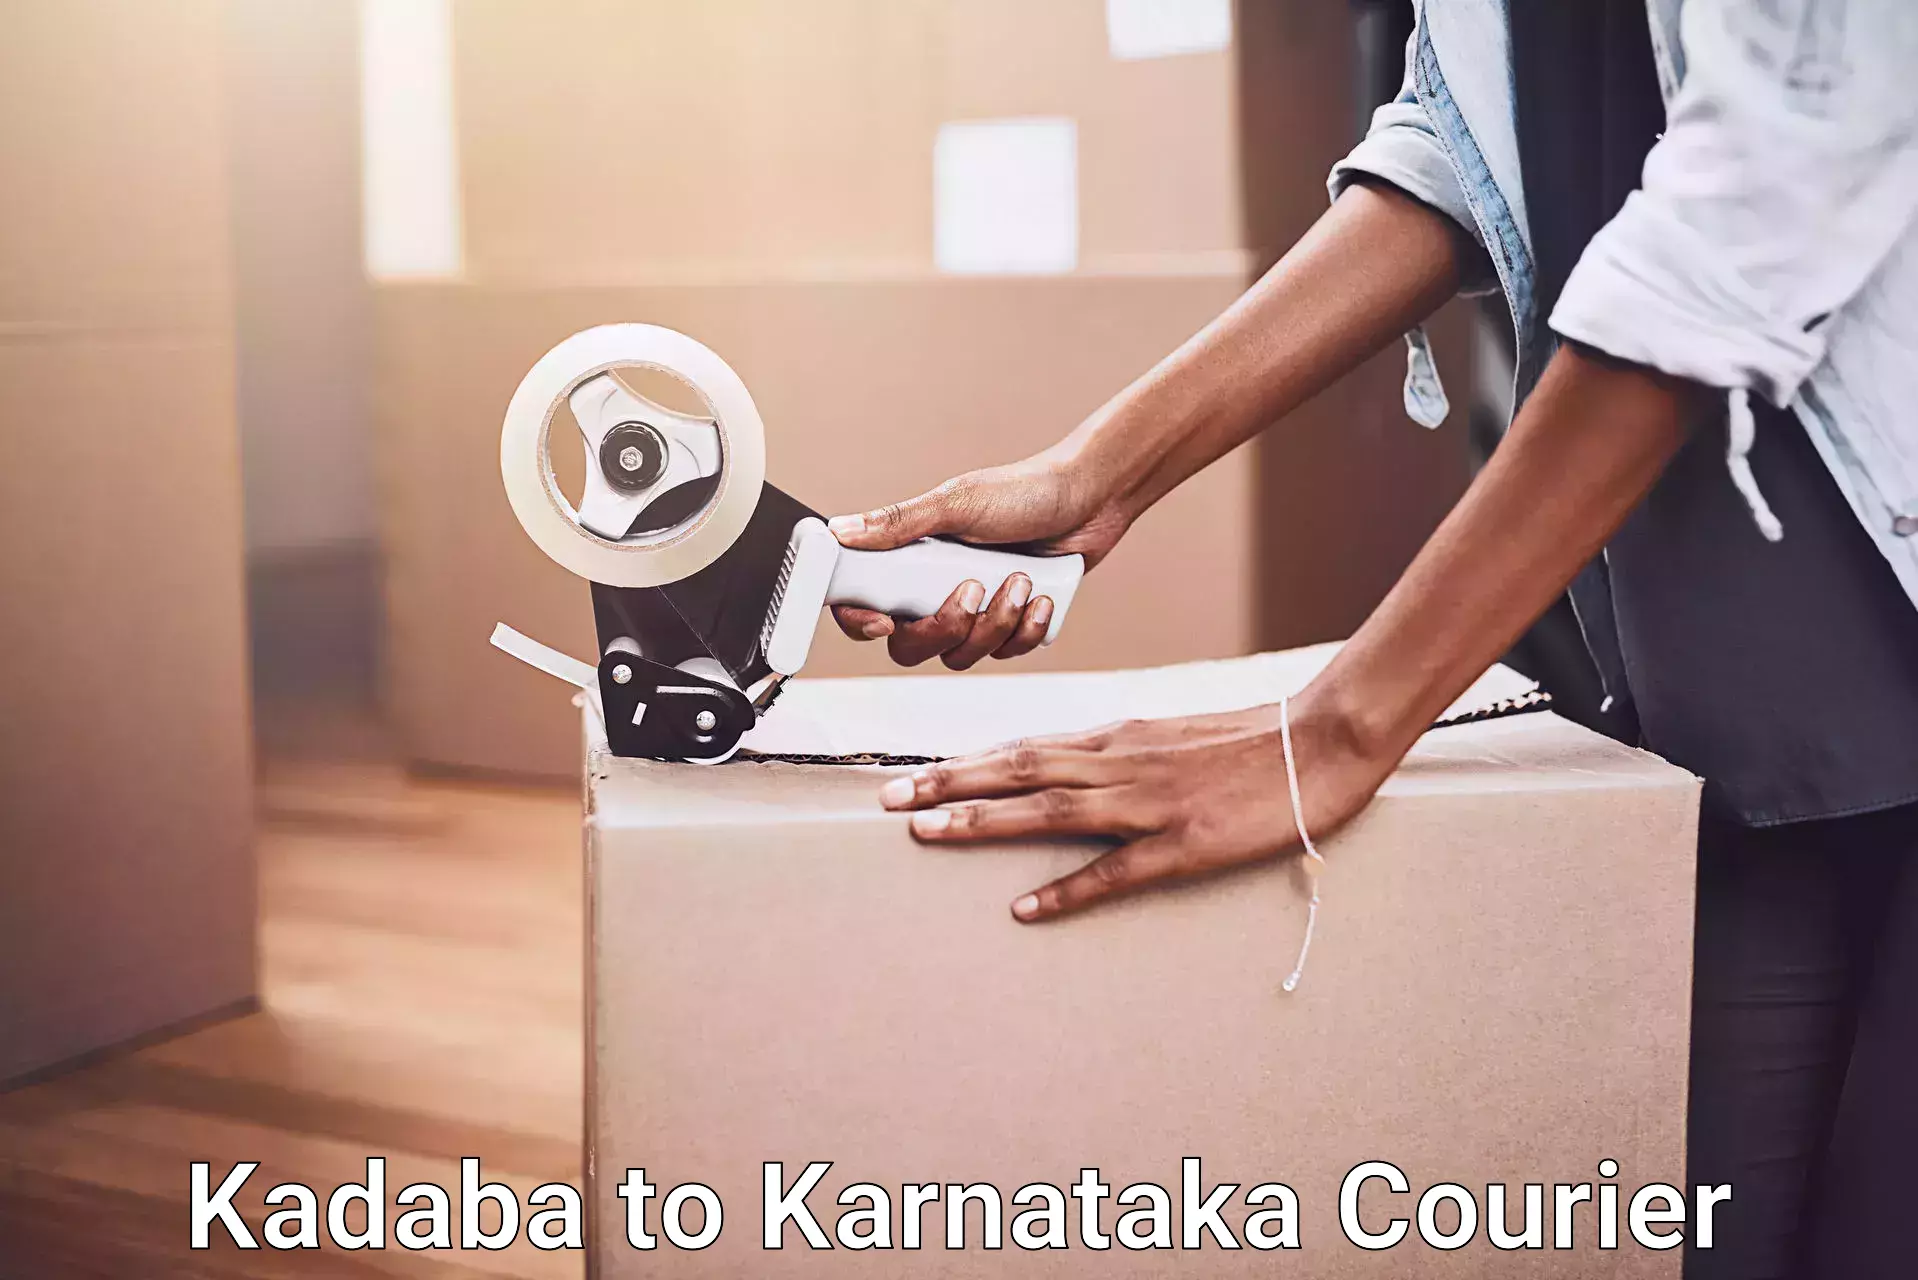 Trusted moving company Kadaba to Bangalore